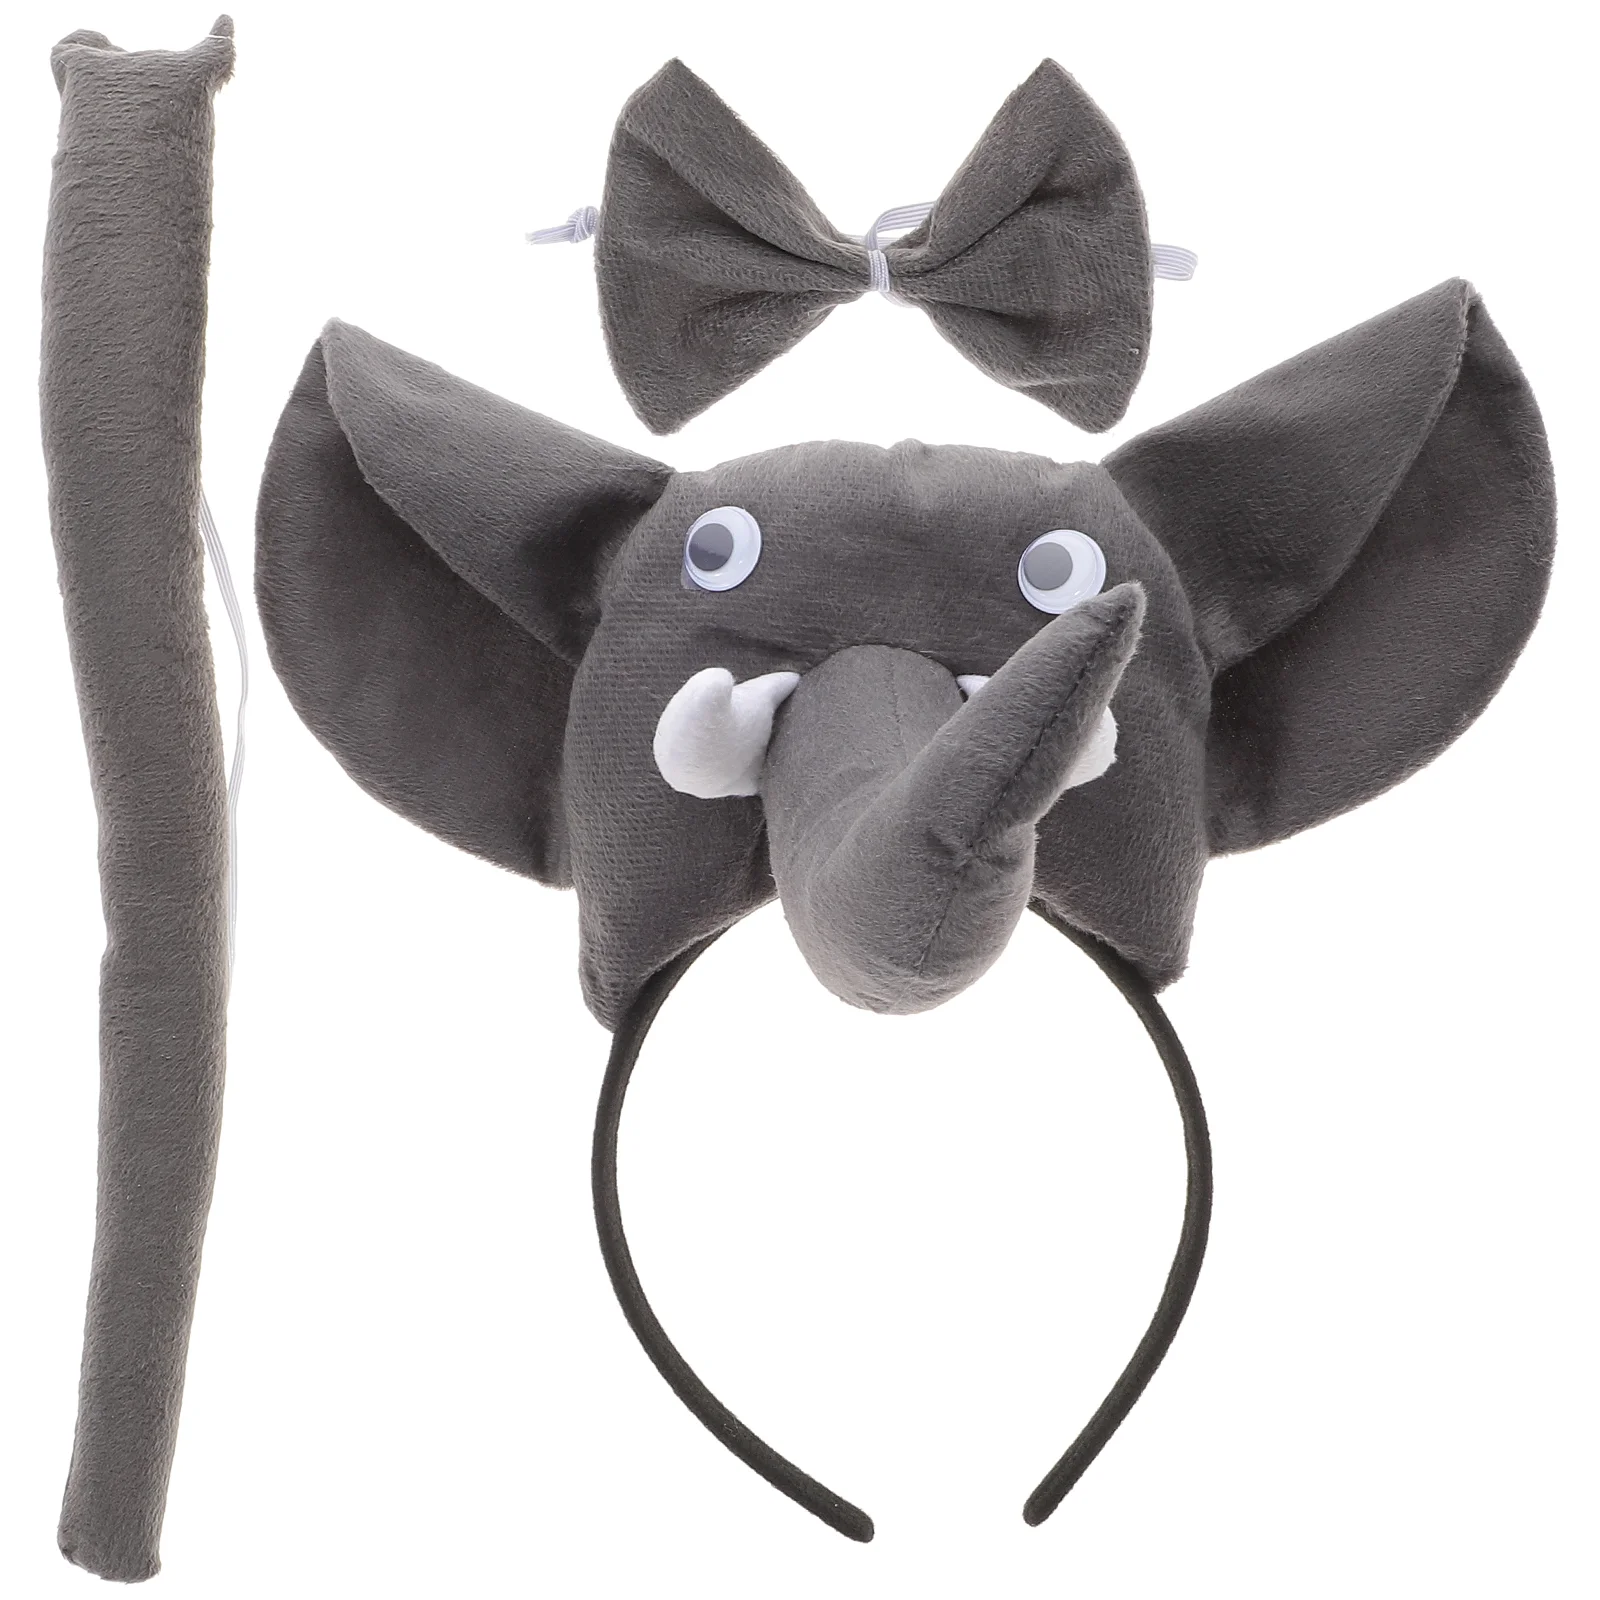 

Props Elephant Headband Toddler Costumes Animal Headbands for Kids Yarn Decorative Hairband